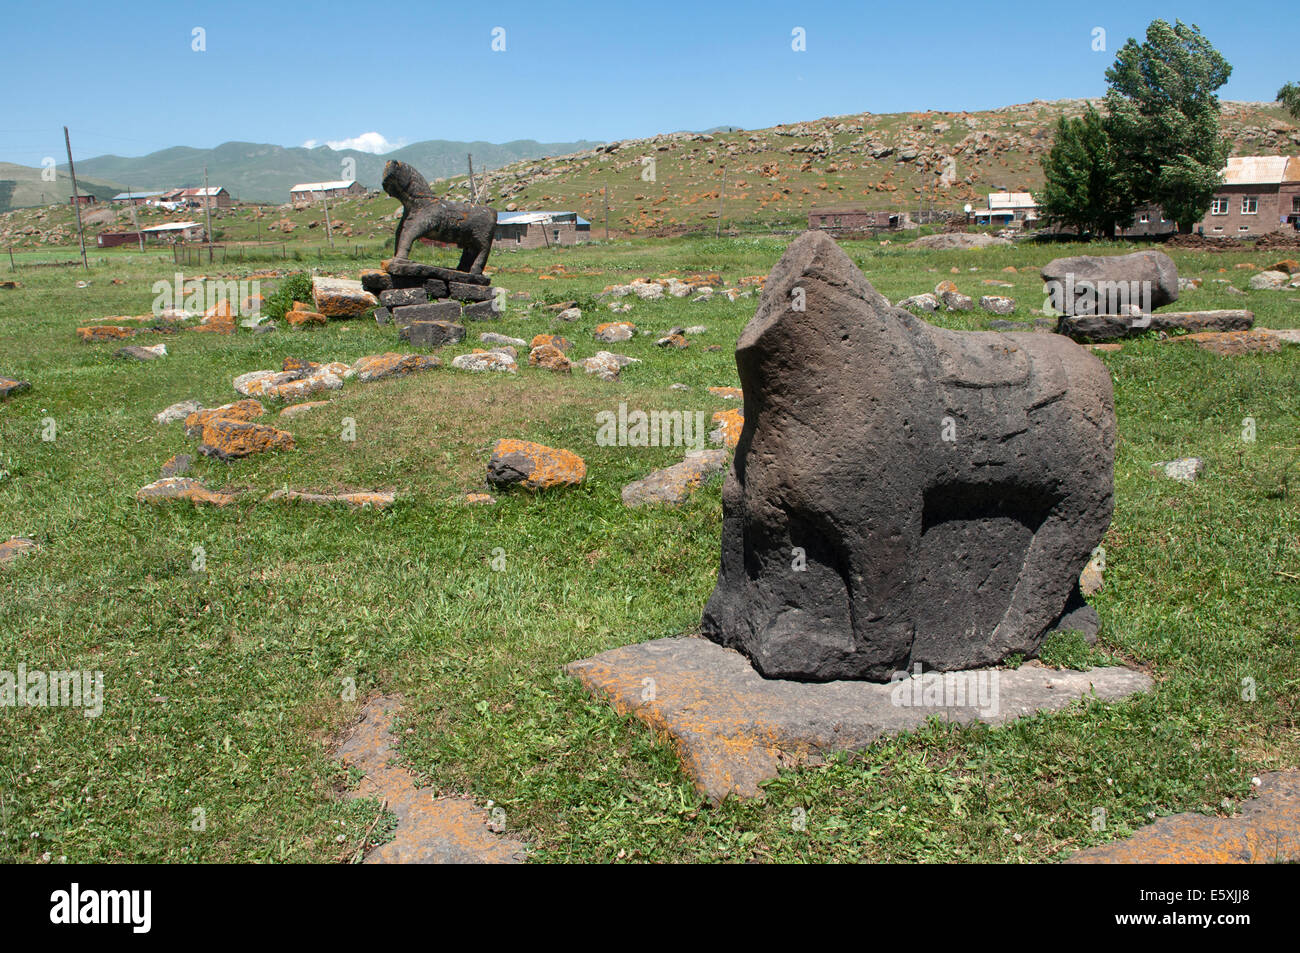 horse-statues-on-a-grave-yazidi-village-